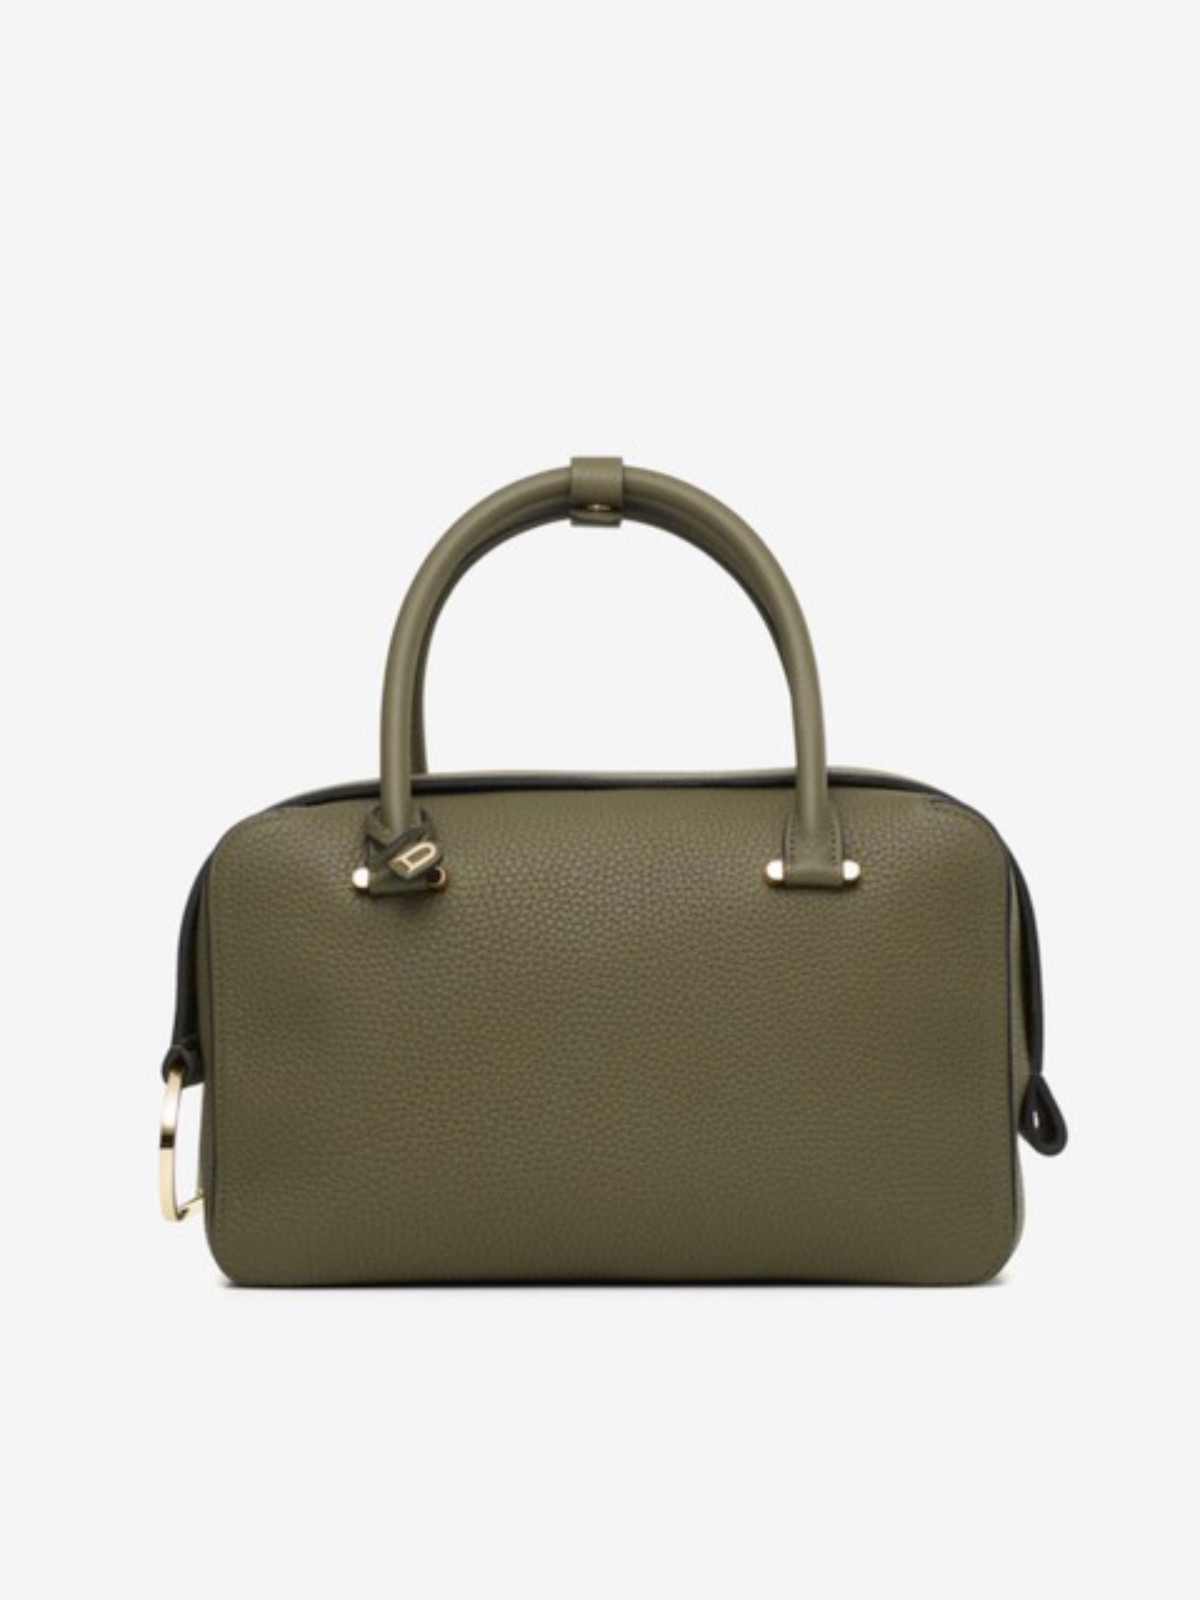 The Honorable Handbag: Delvaux Autumn/Winter 2015 Lookbook at